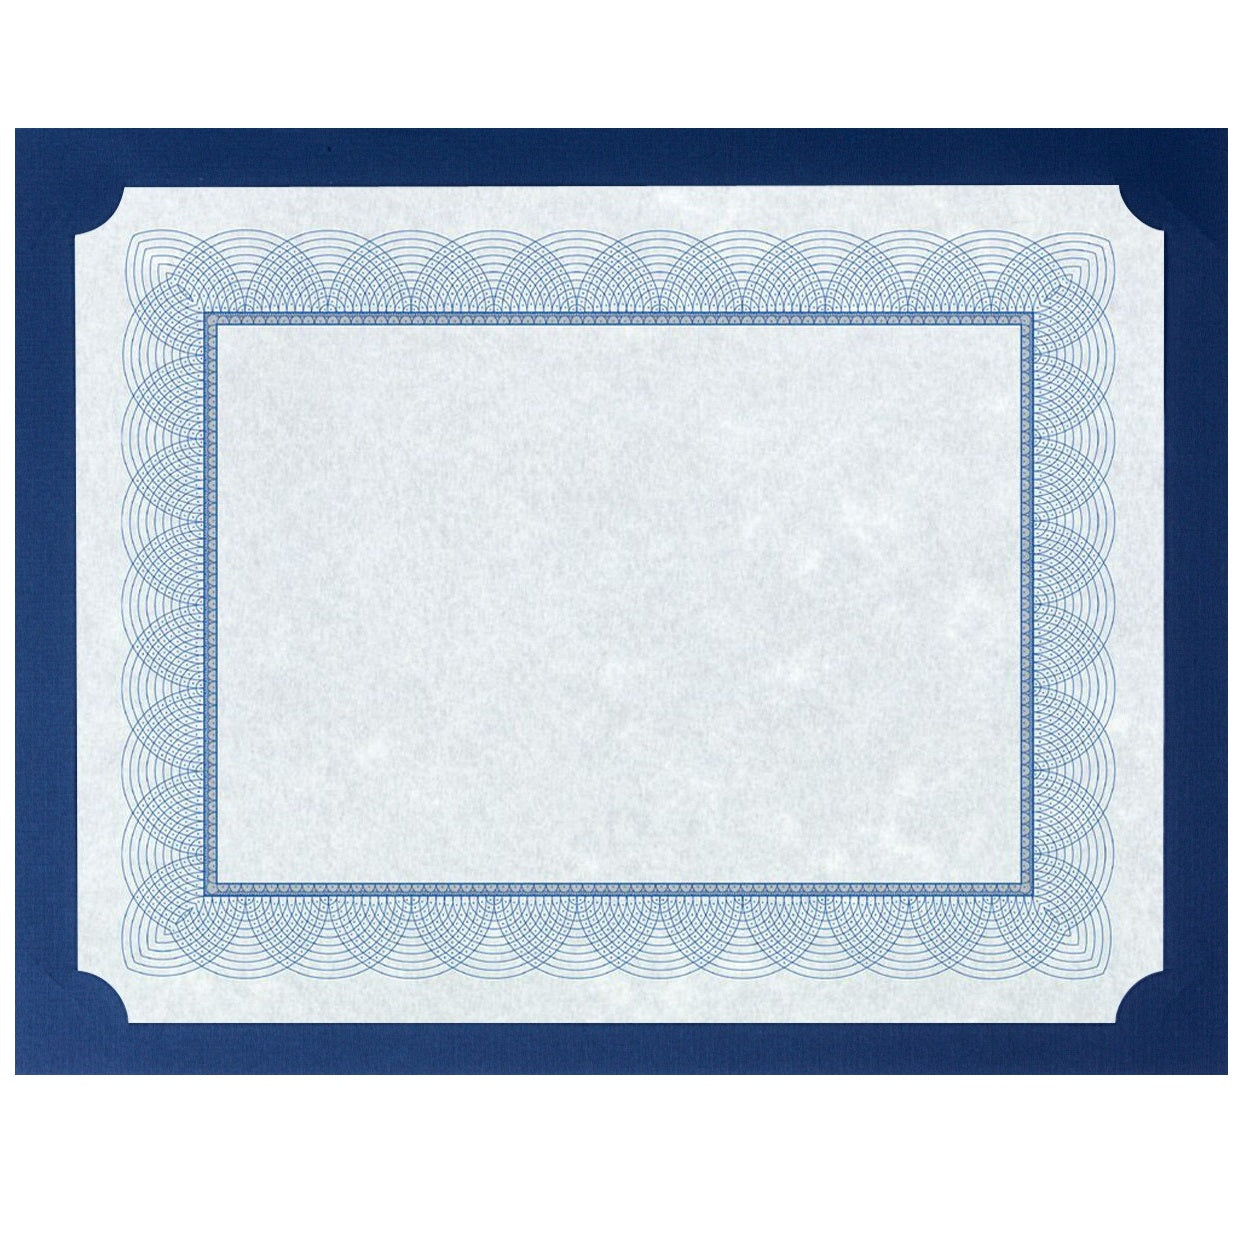 St. James® Presentation Cards/Certificate Holders, Non-Folding, Navy Blue Linen, Pack of 25